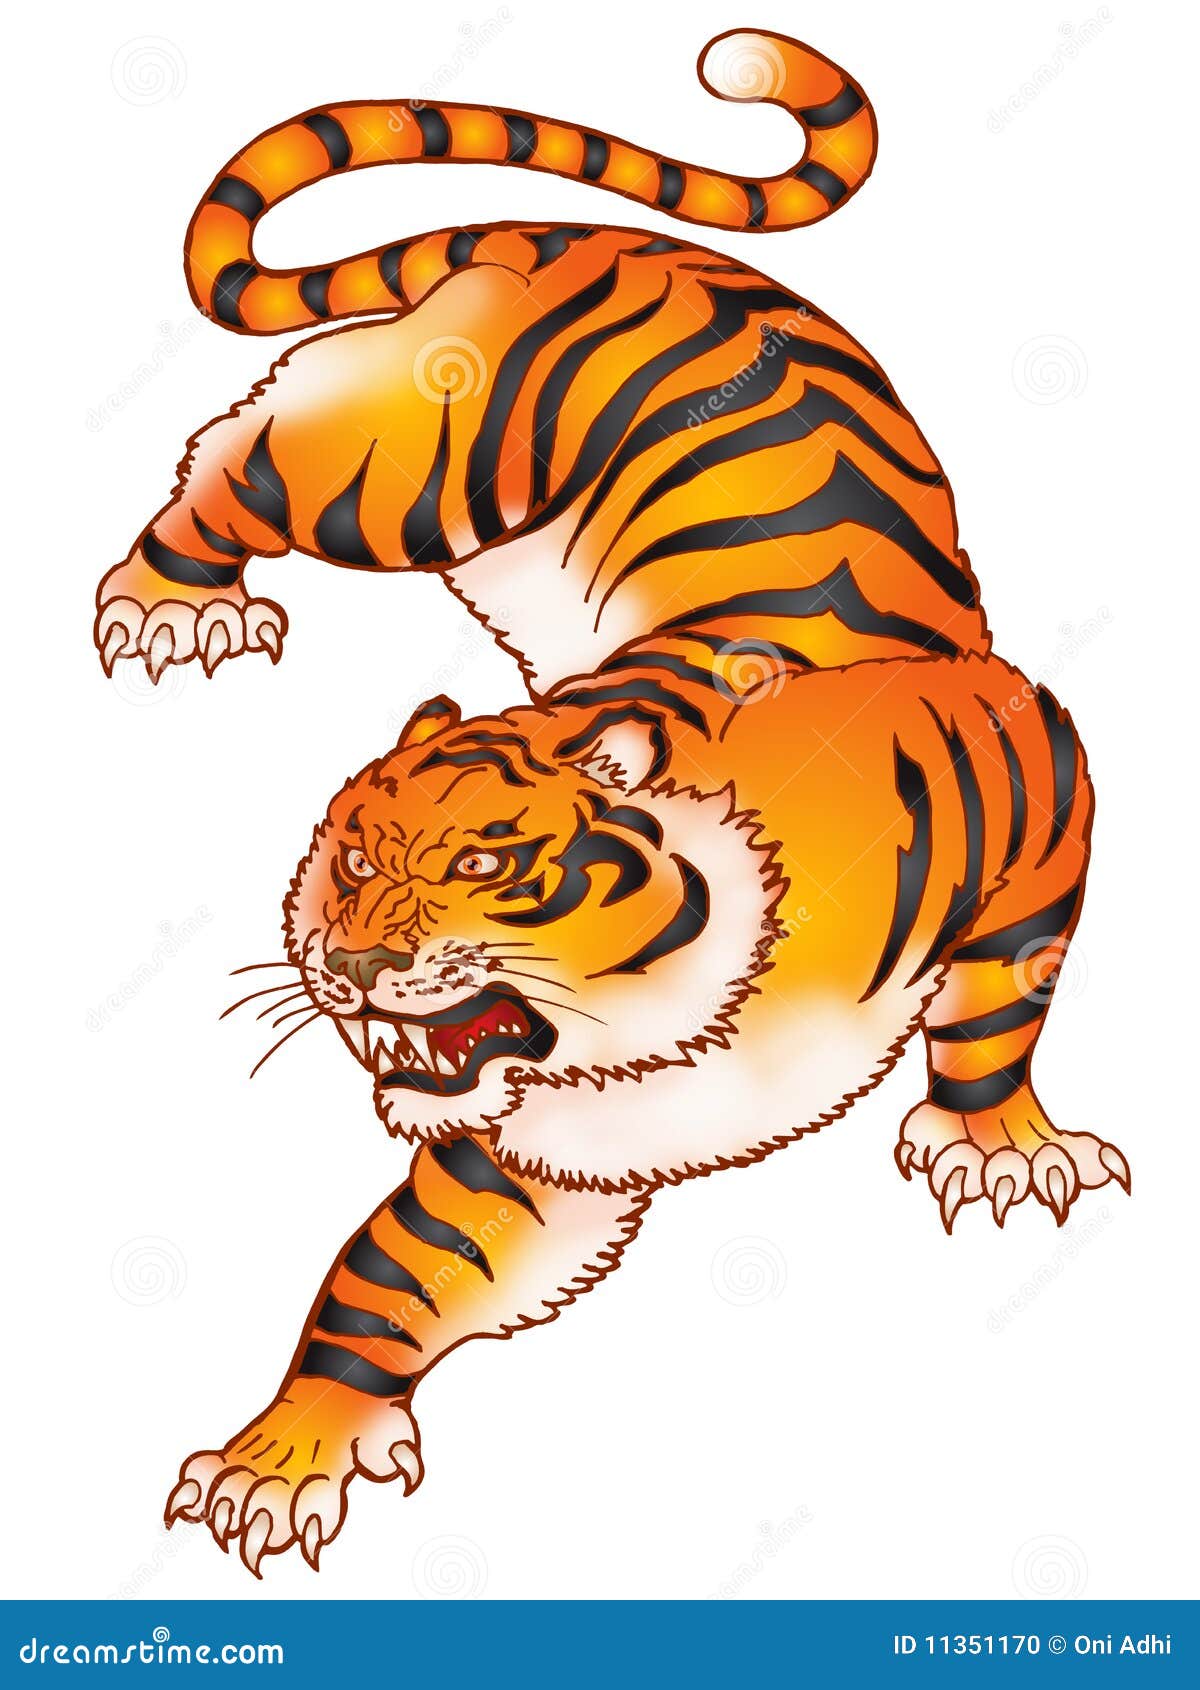 tiger roar clipart - photo #16